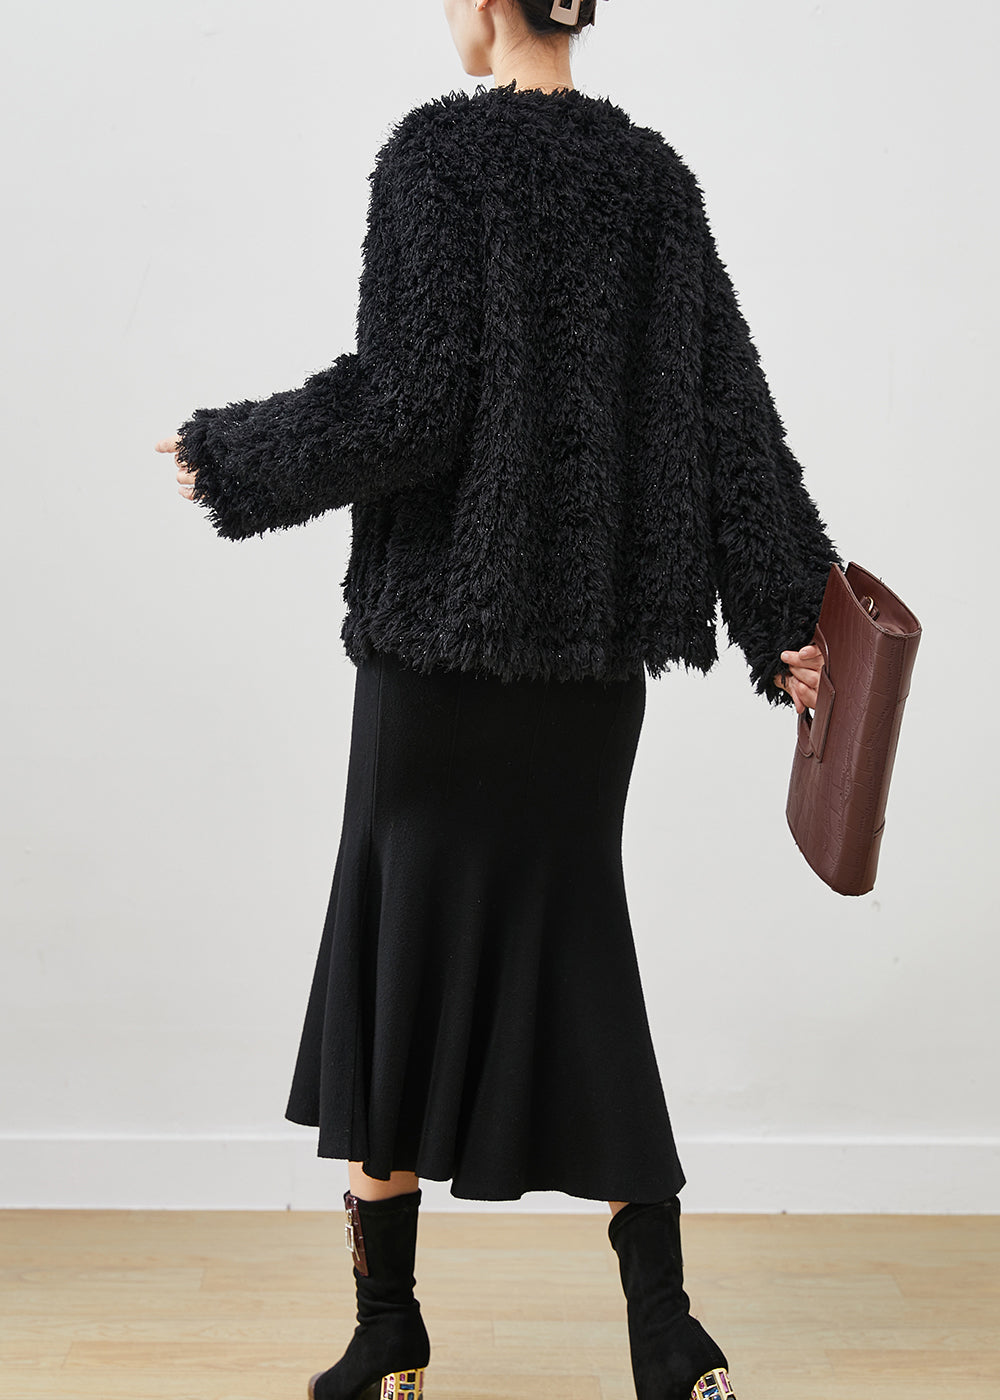 Modern Black Sequins Faux Fur Coats And Dress Two-Piece Set Winter